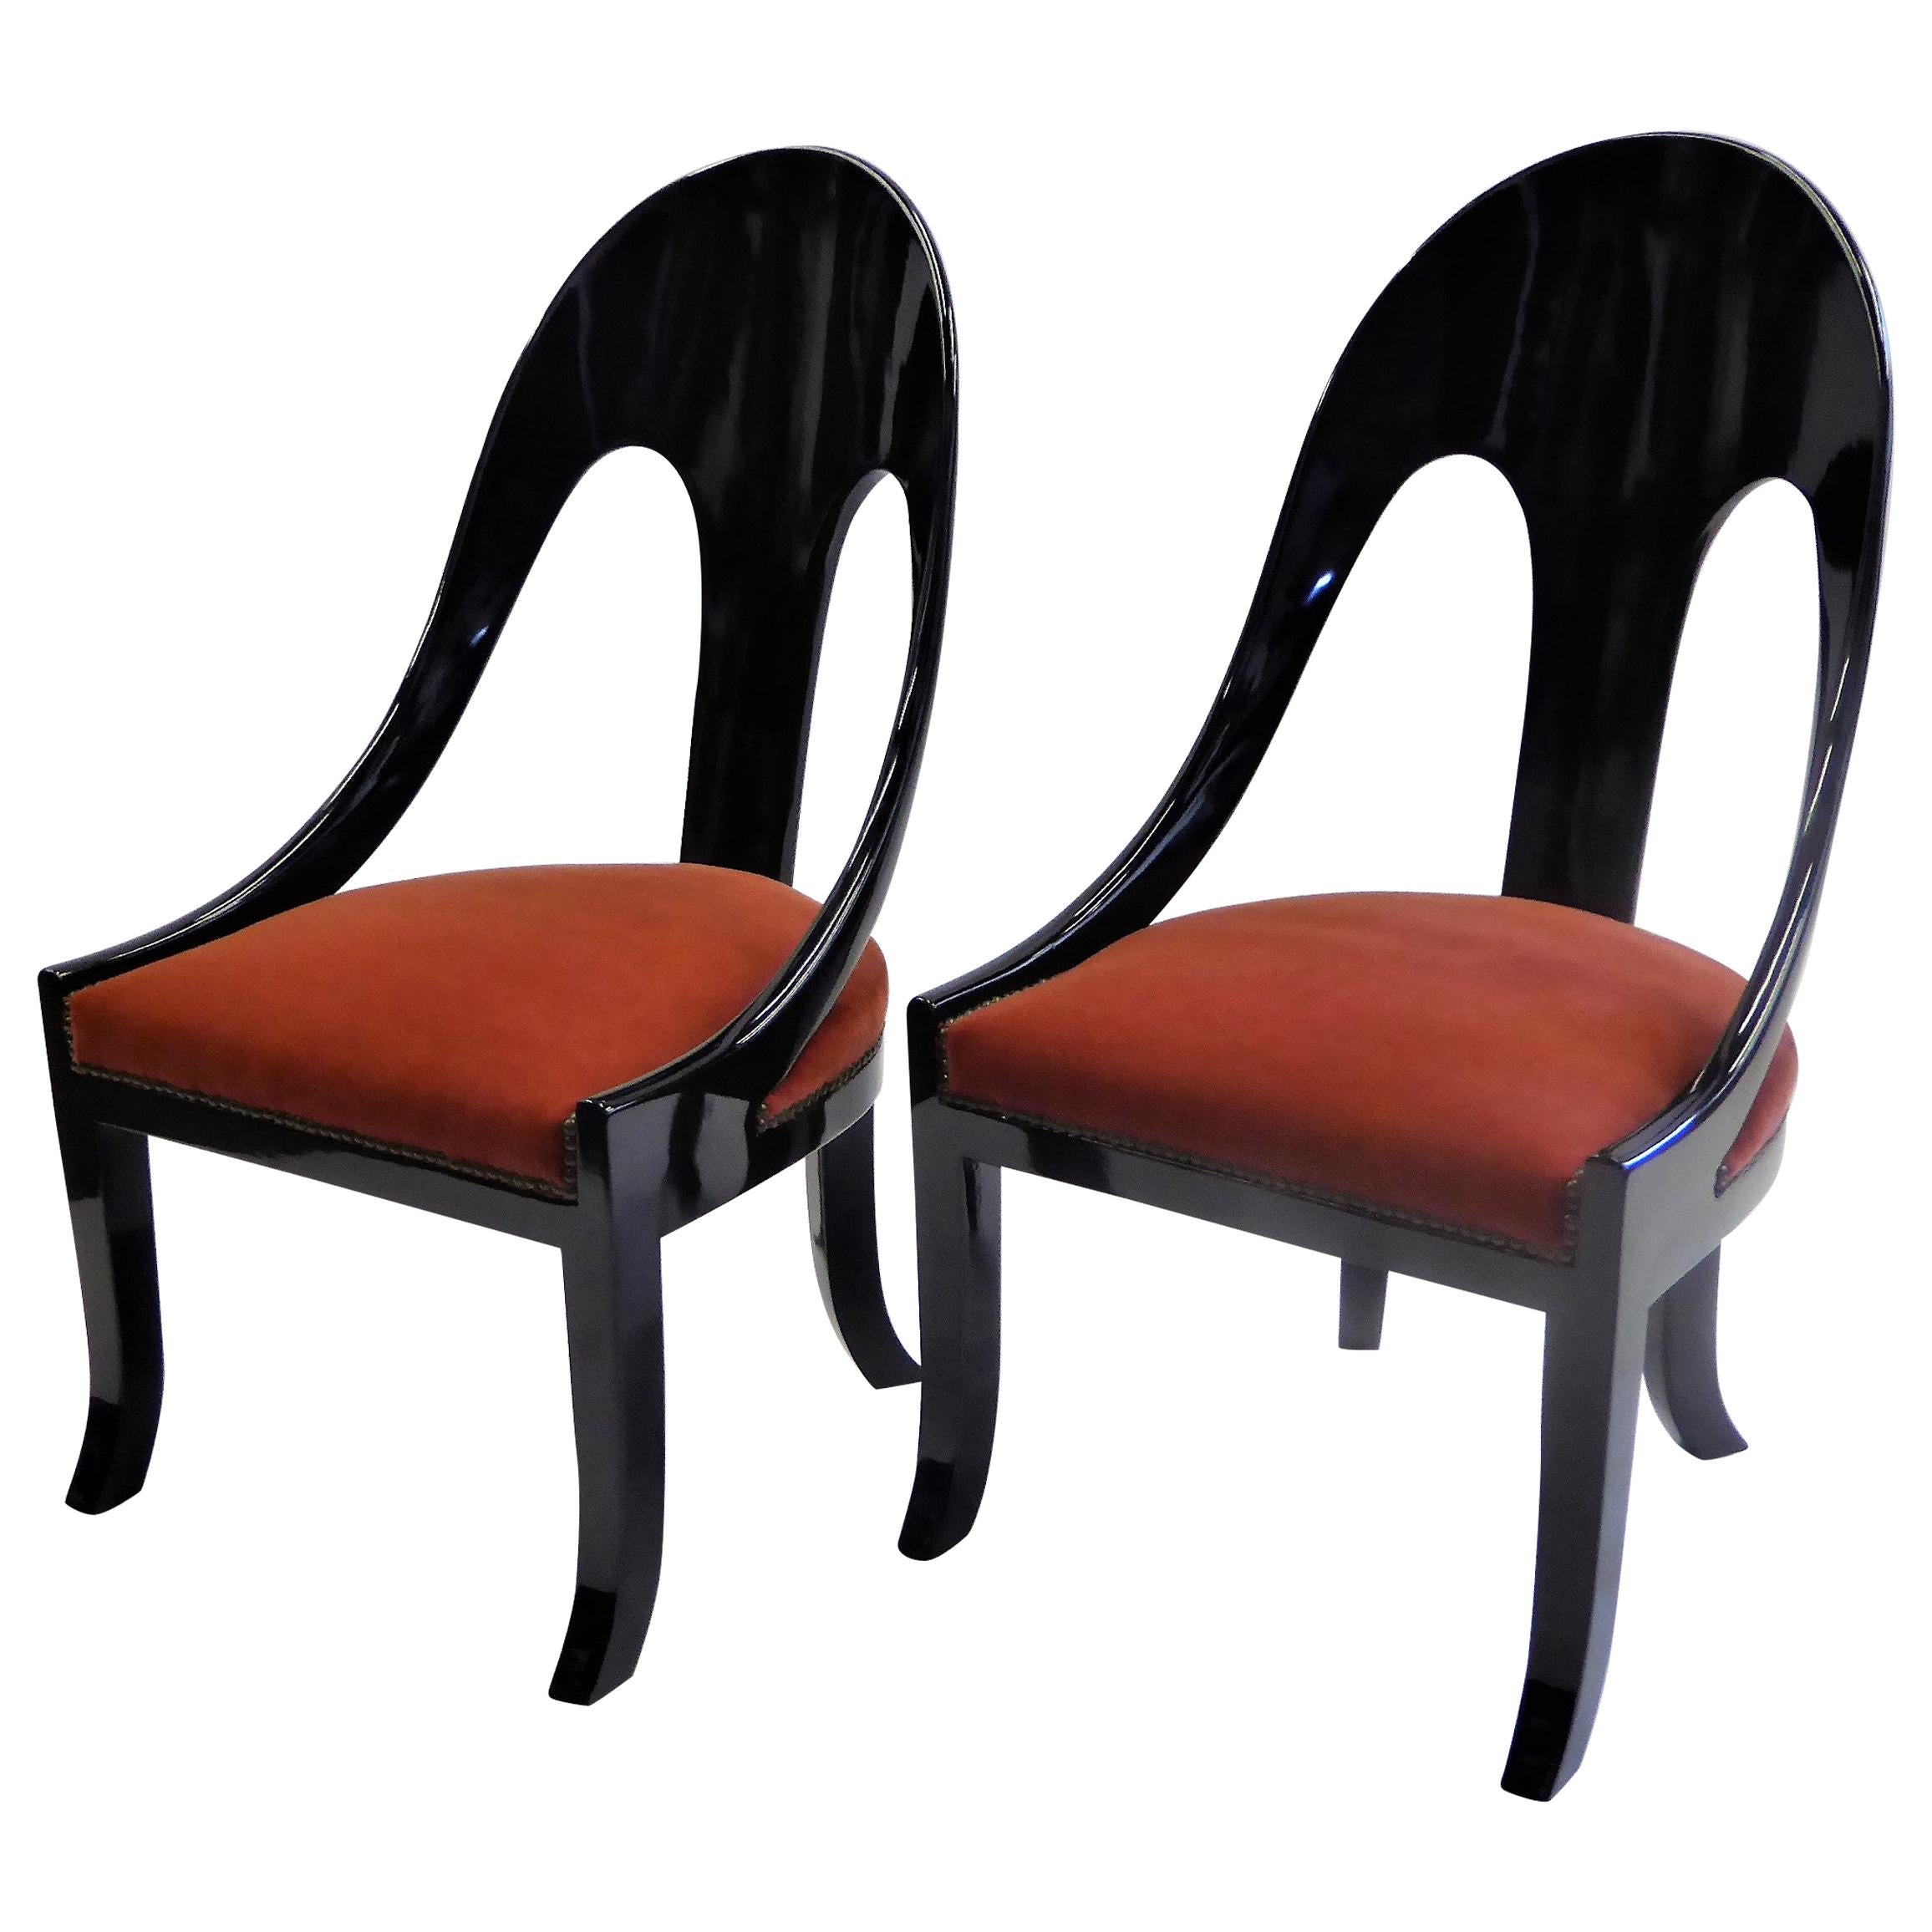 1930s Art Deco Black Lacquered Spoonback Chairs in Mohair Velvet